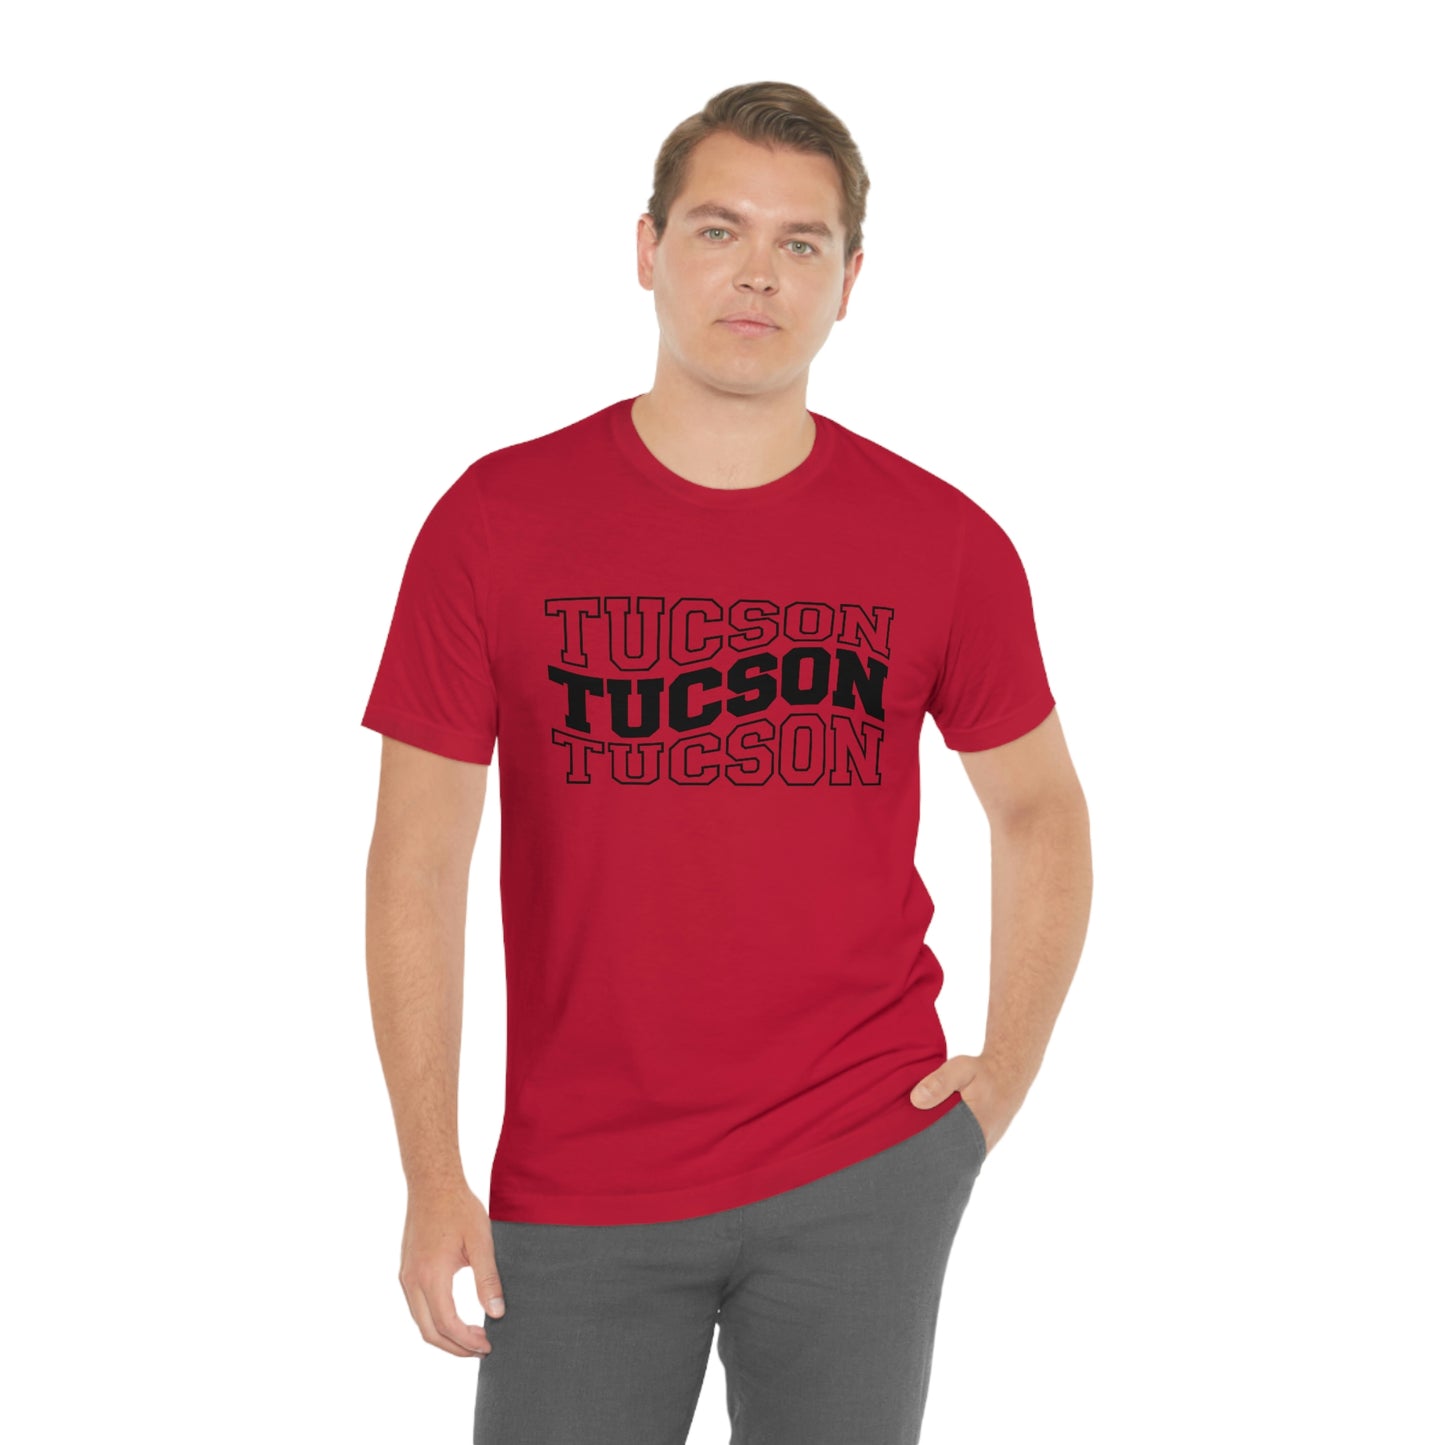 Tucson Arizona Unisex Jersey Short Sleeve Tee Tshirt T-shirt